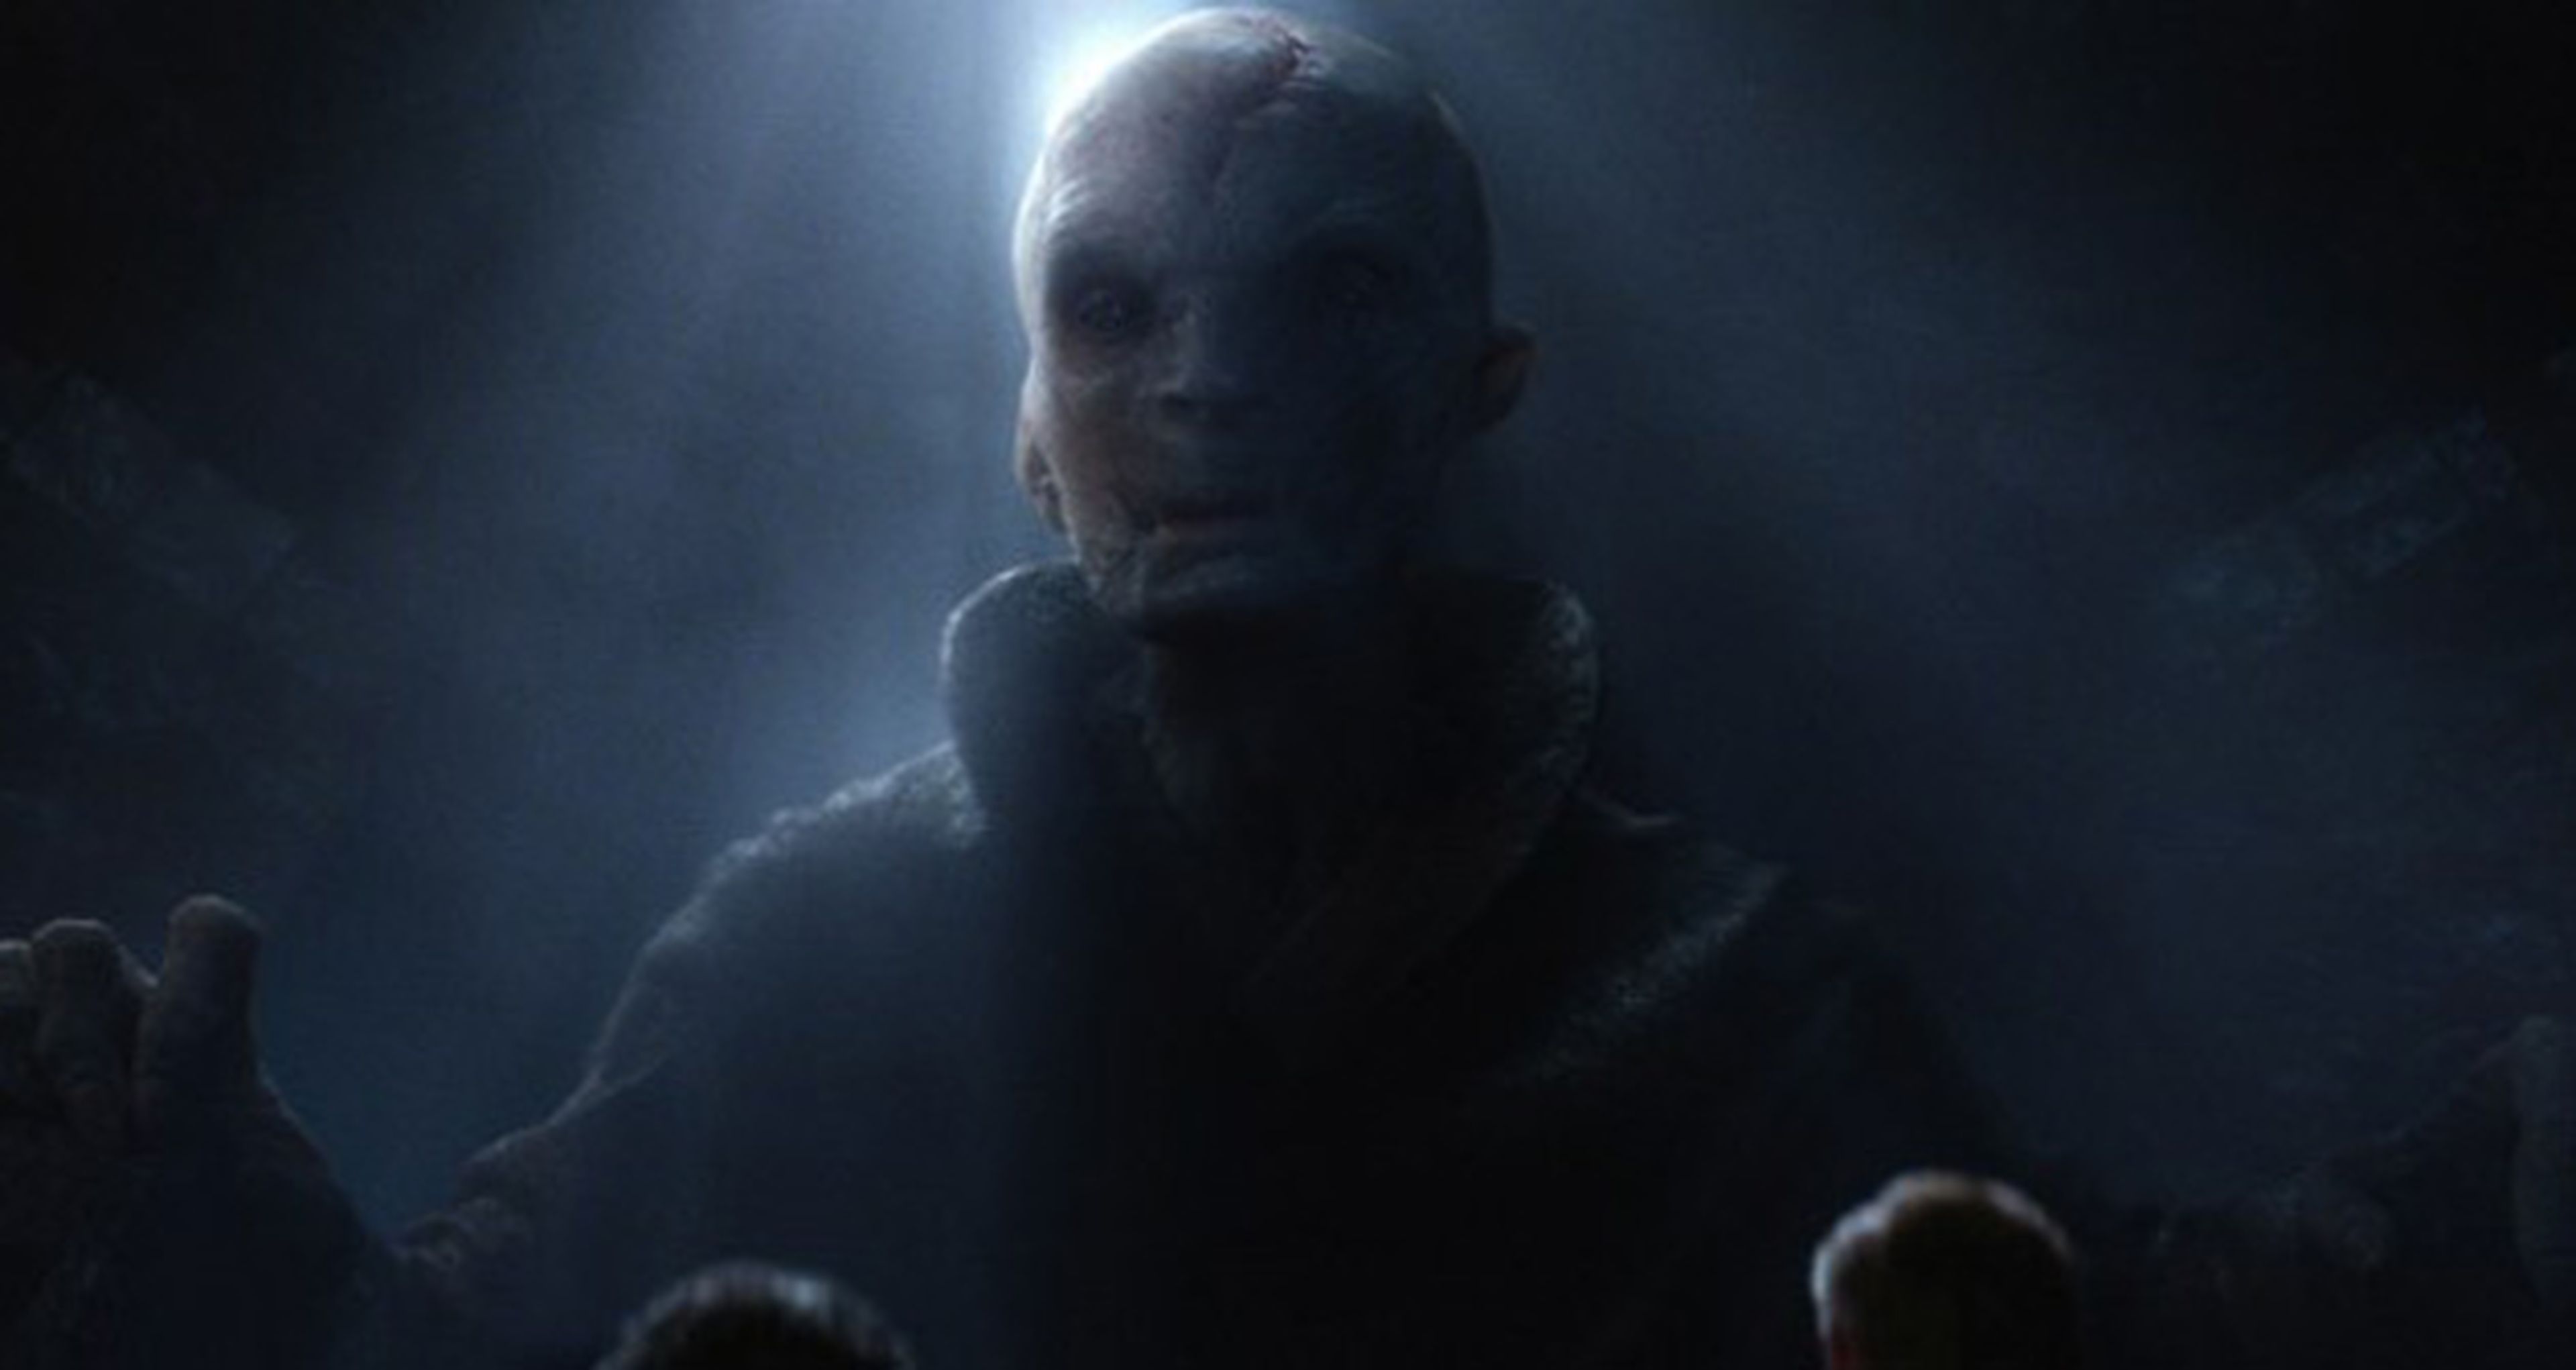 Star Wars 7: ¿La identidad del Líder Supremo Snoke, revelada? (SPOILERS)